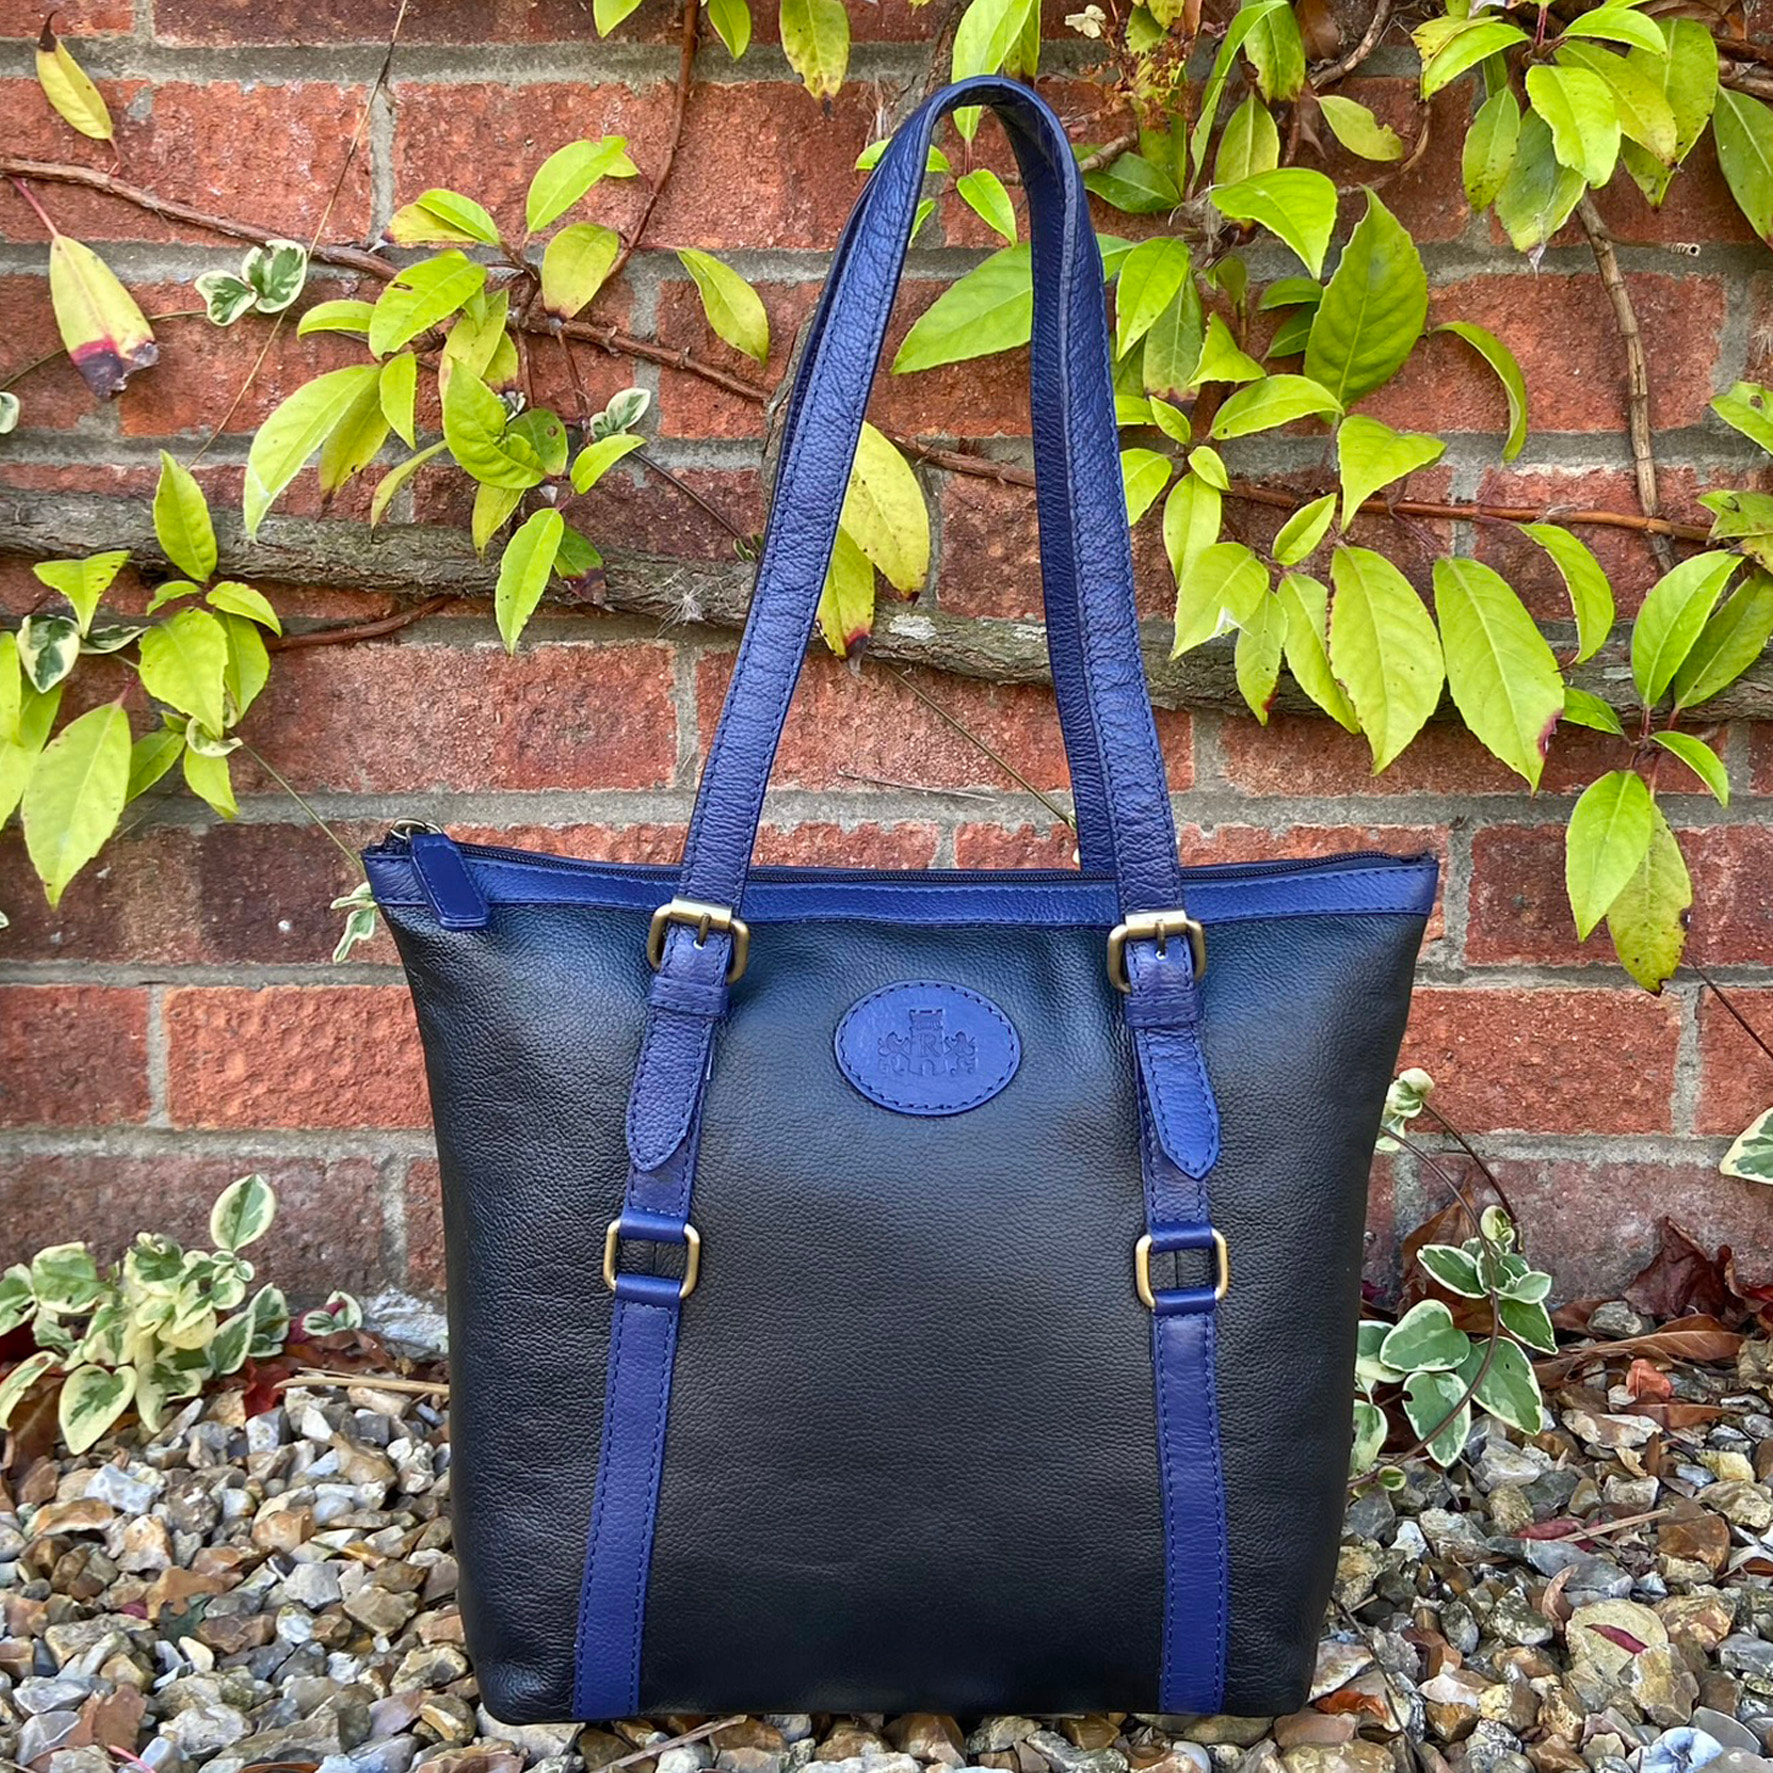 Rowallan Black and Blue Contrast Leather Shoulder Bag, Handbag